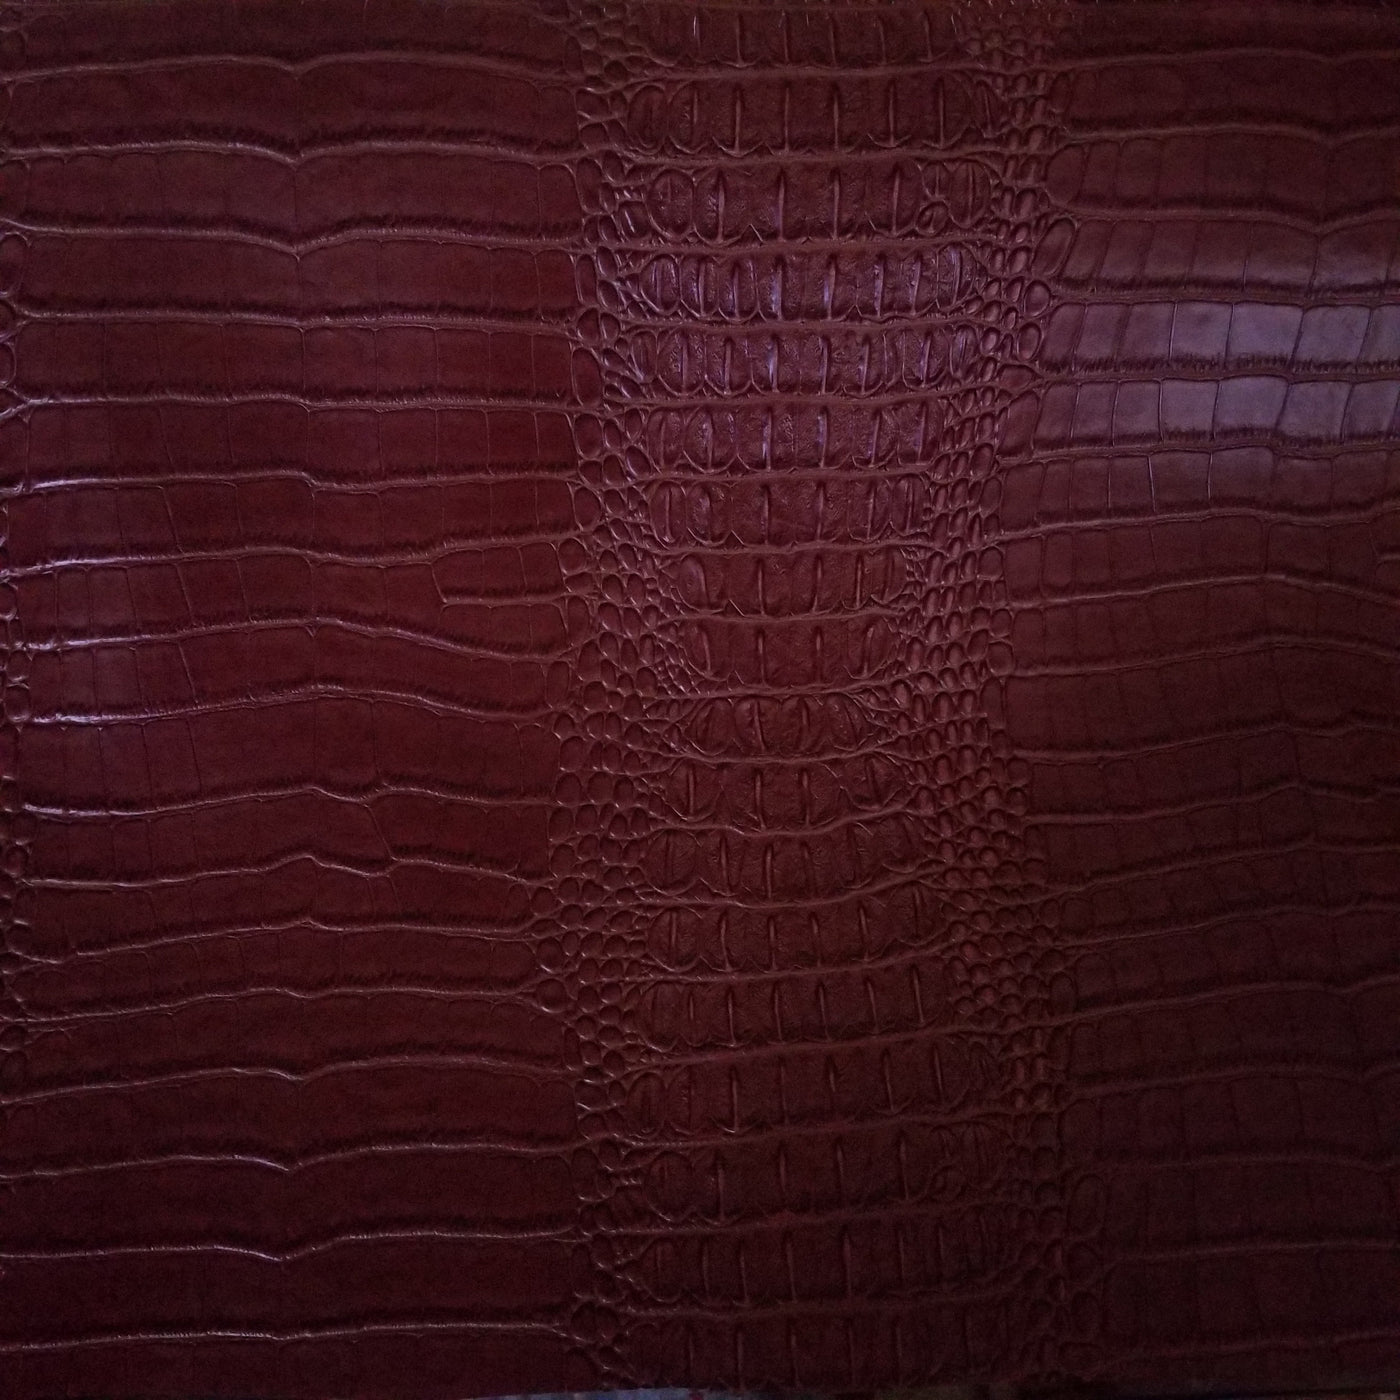 texture of red maroon genuine leather, like crocodile skin Stock Photo